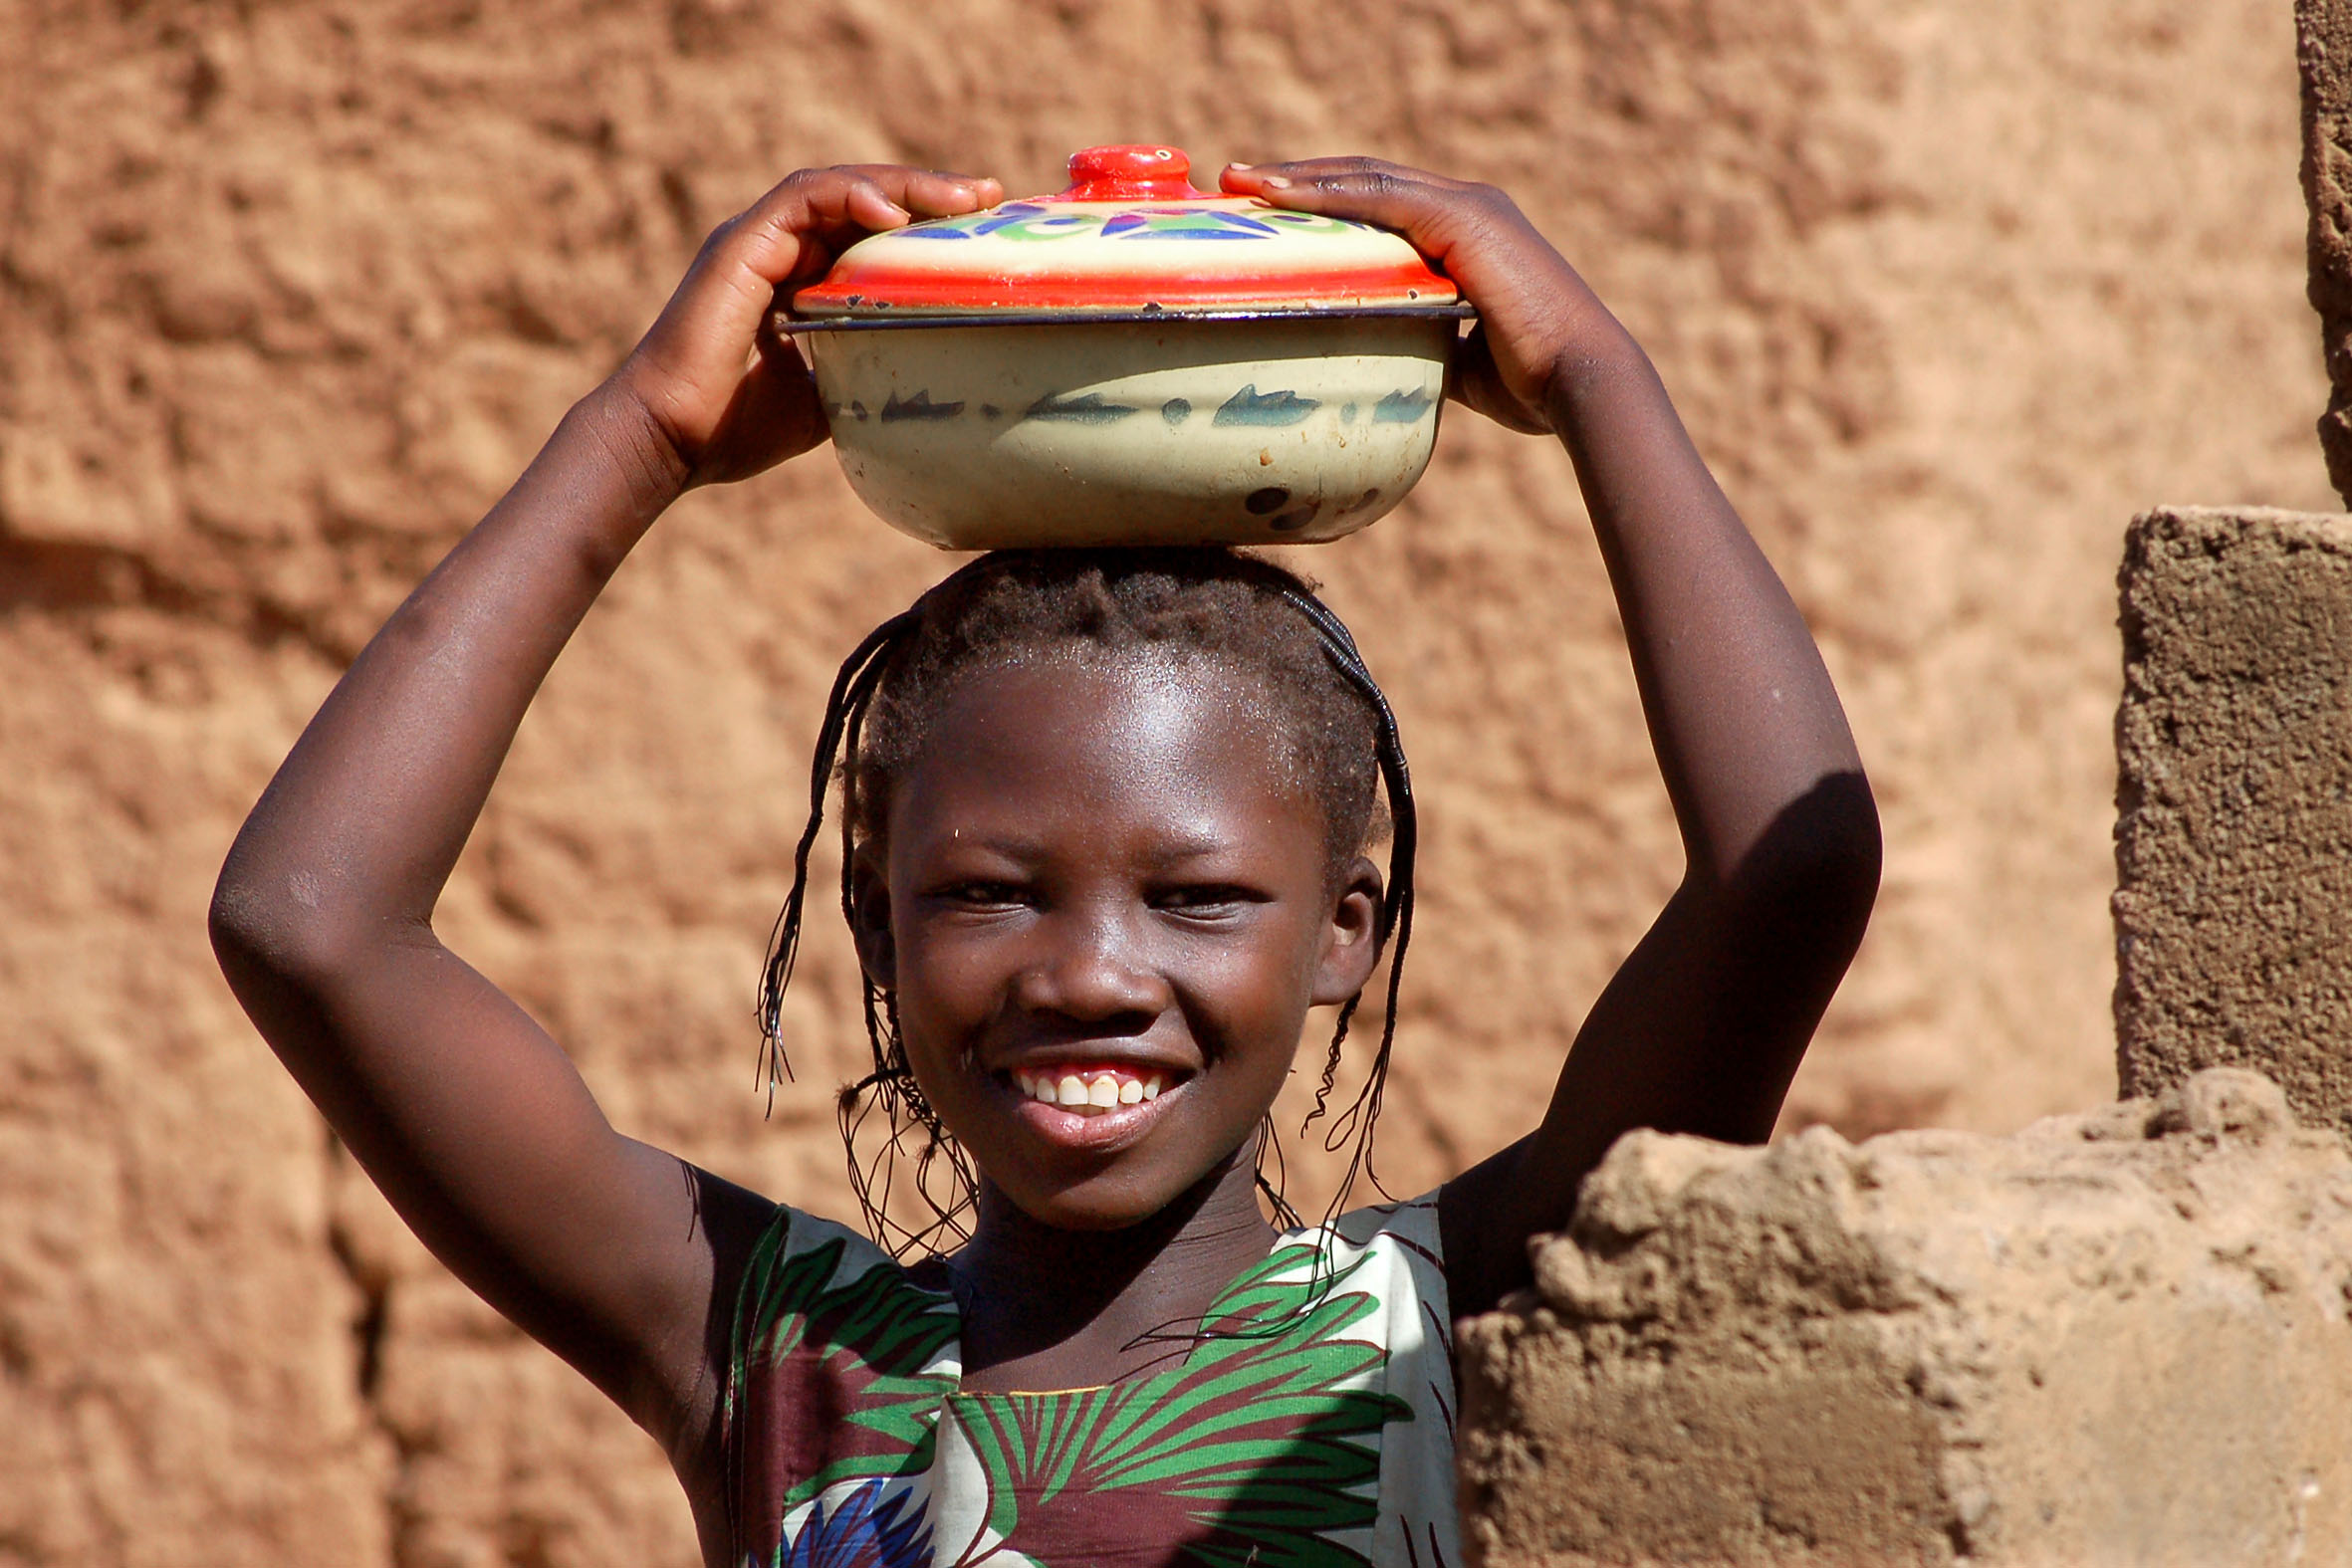 Mädchen in Burkina Faso (c) Walter Korn